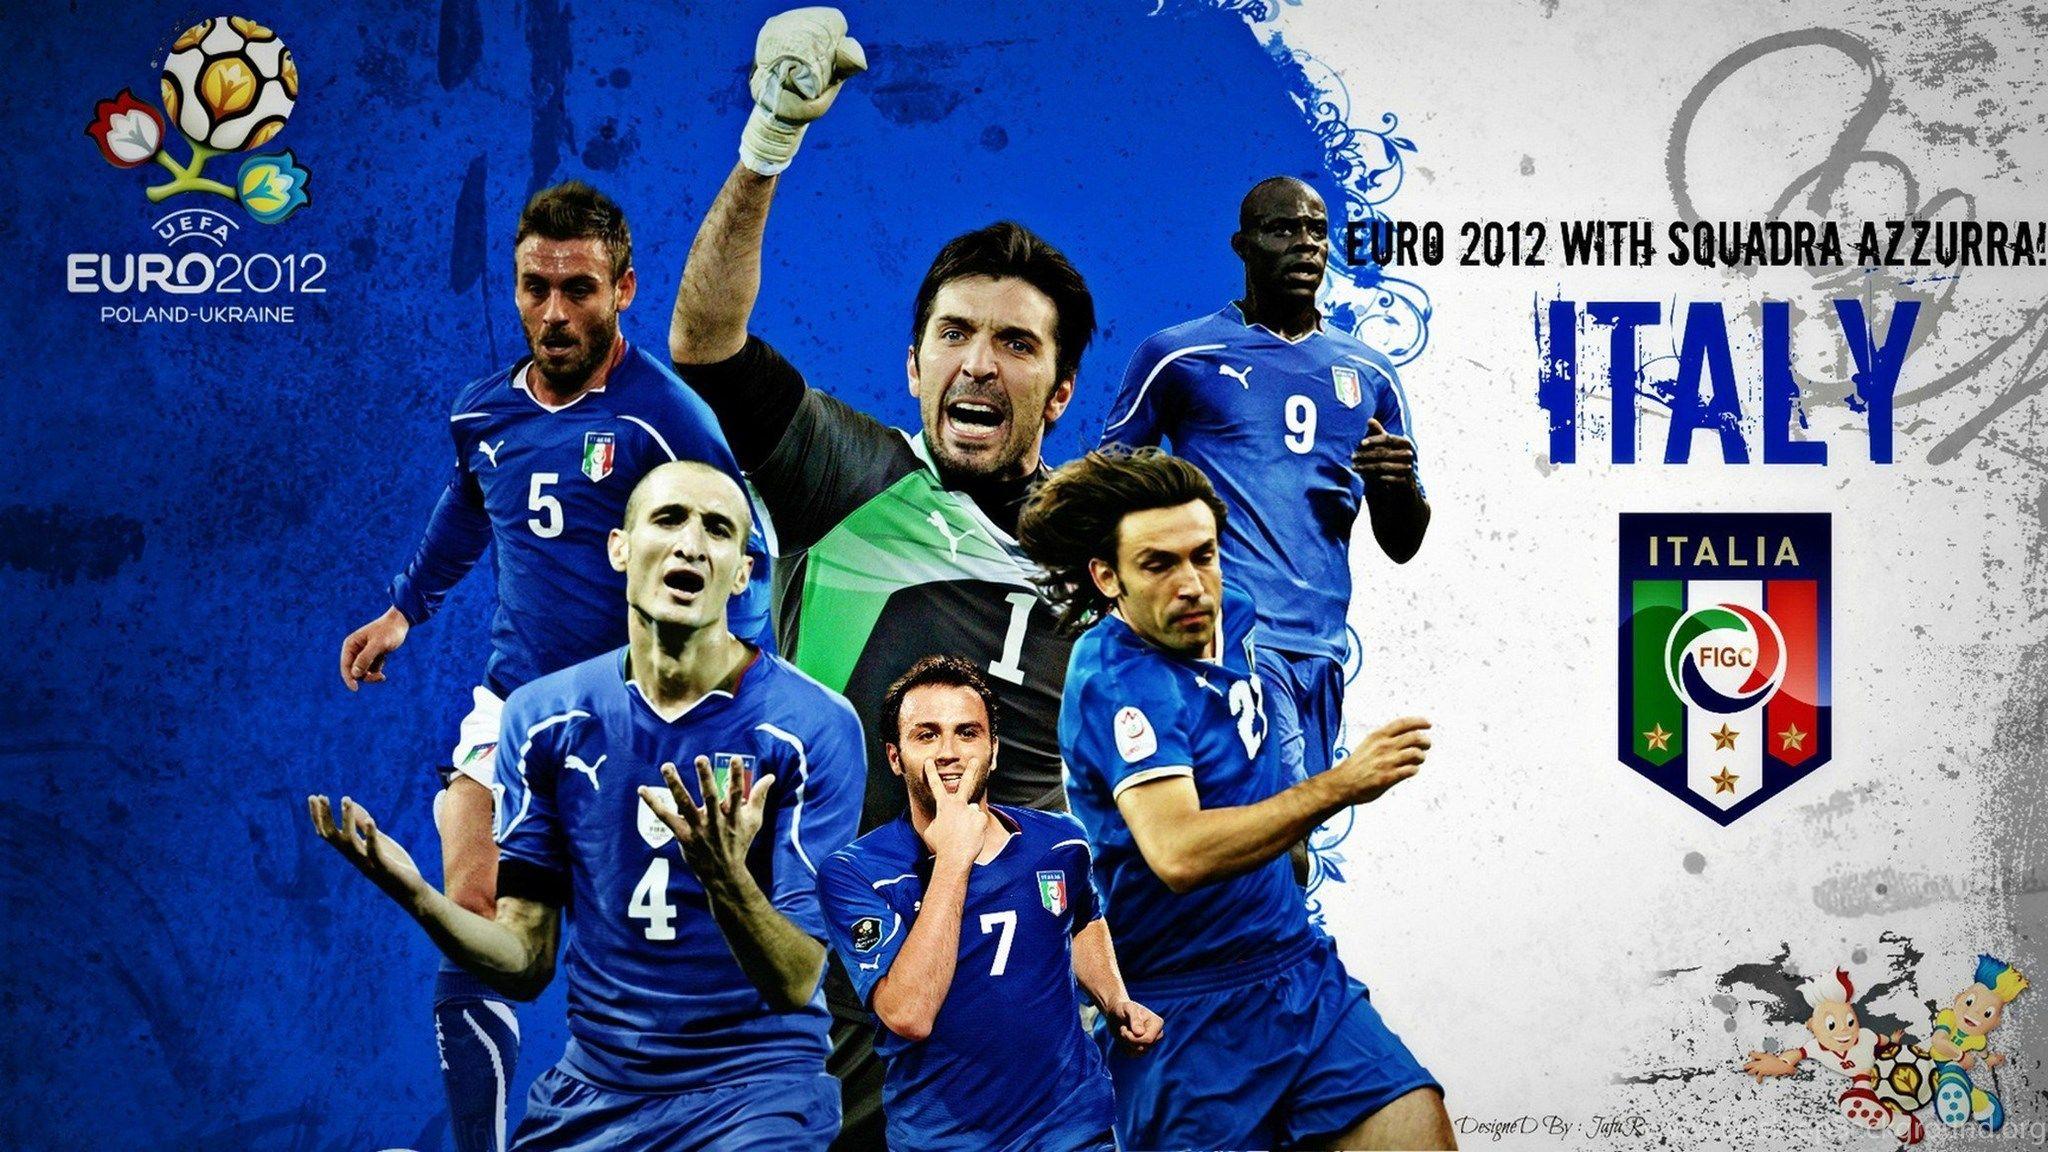 FIFA ITALY World Cup Soccer Italian (8) Wallpaper Desktop Background